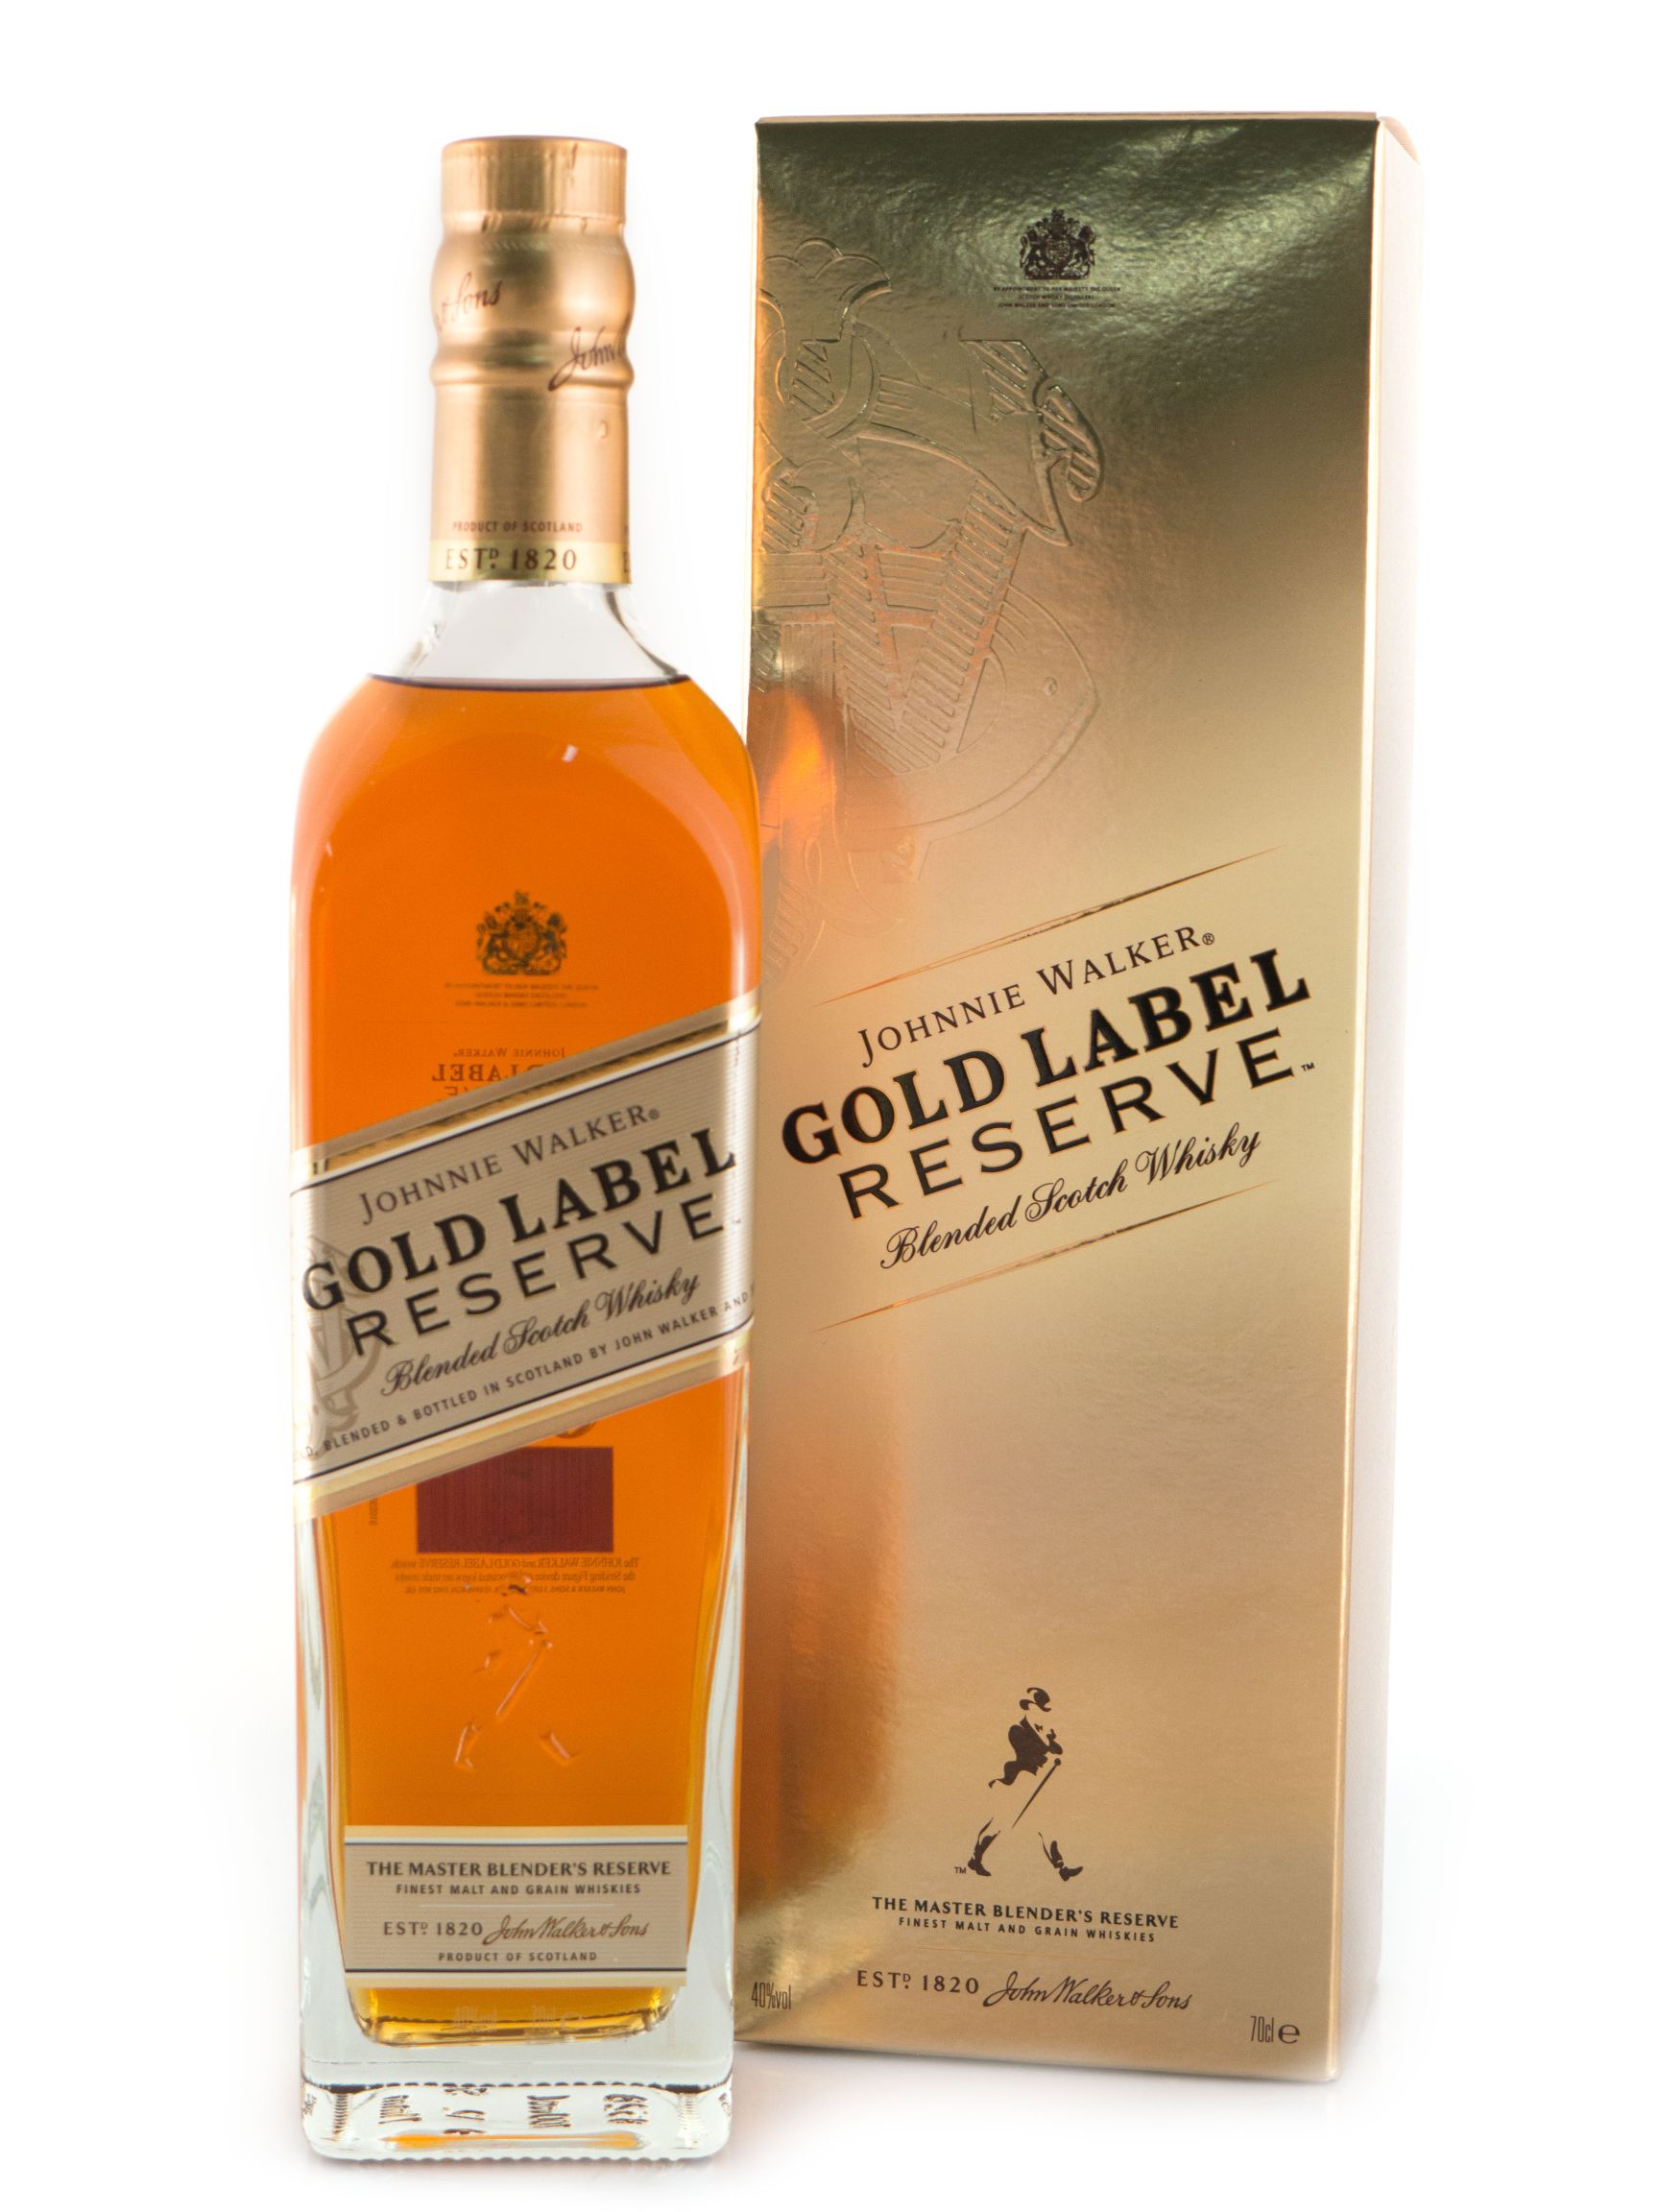 Johnnie Walker Gold Label Reserve, Scotch Whisky - 40% vol - (0,7L)